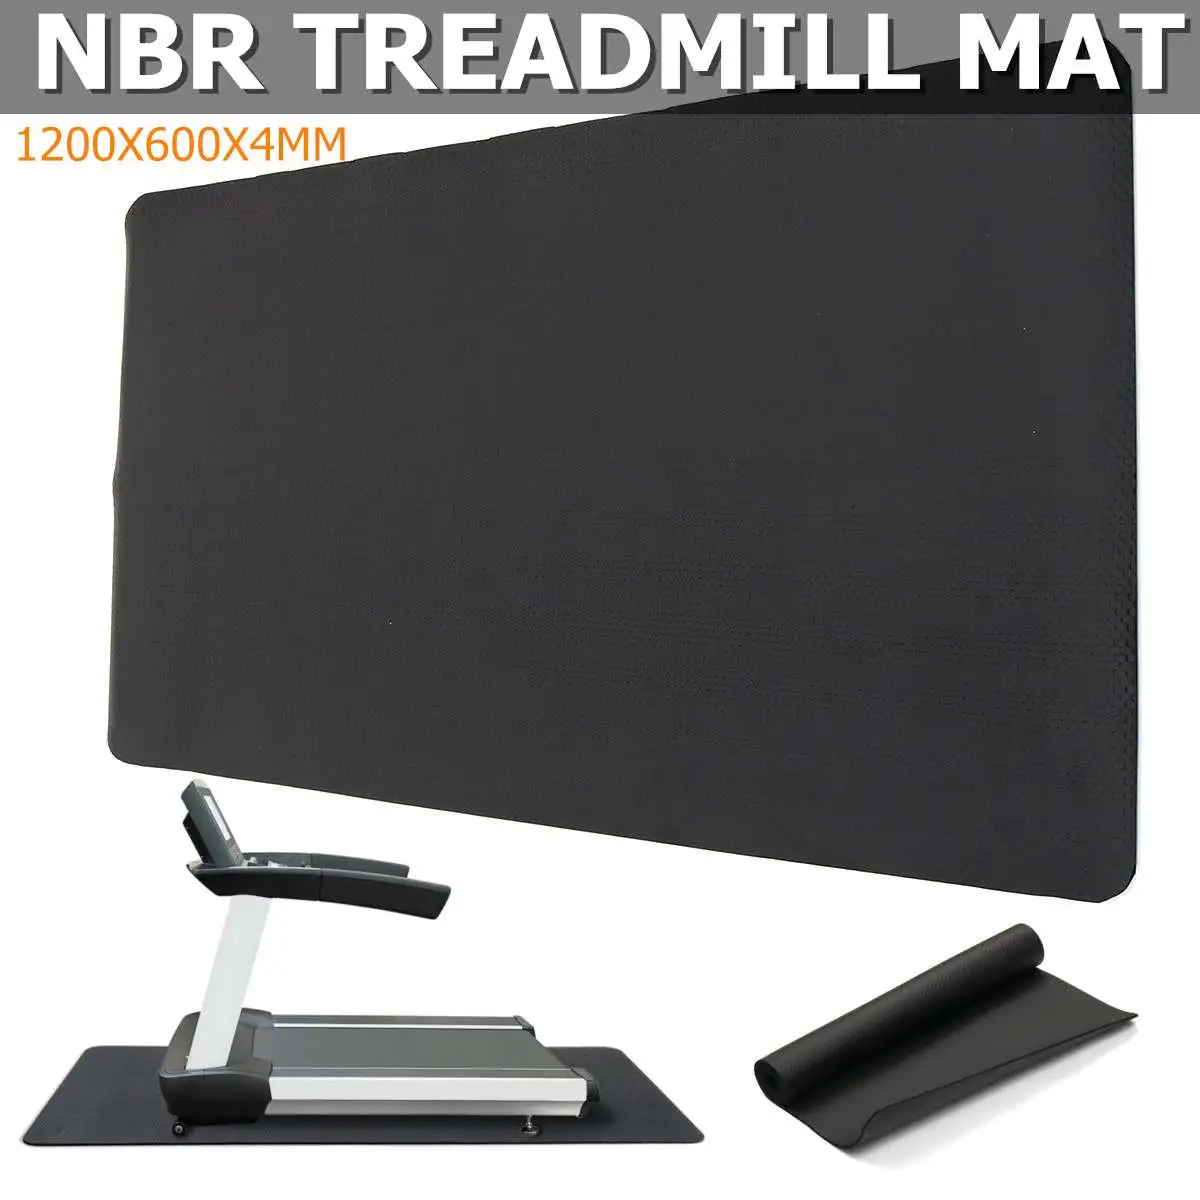 

1200*600*4MM NBR Treadmill Mat Floor Protector Waterproof Fireproof Exercise Treadmill Carpet Pad Home Gym Fitness Equipment Mat